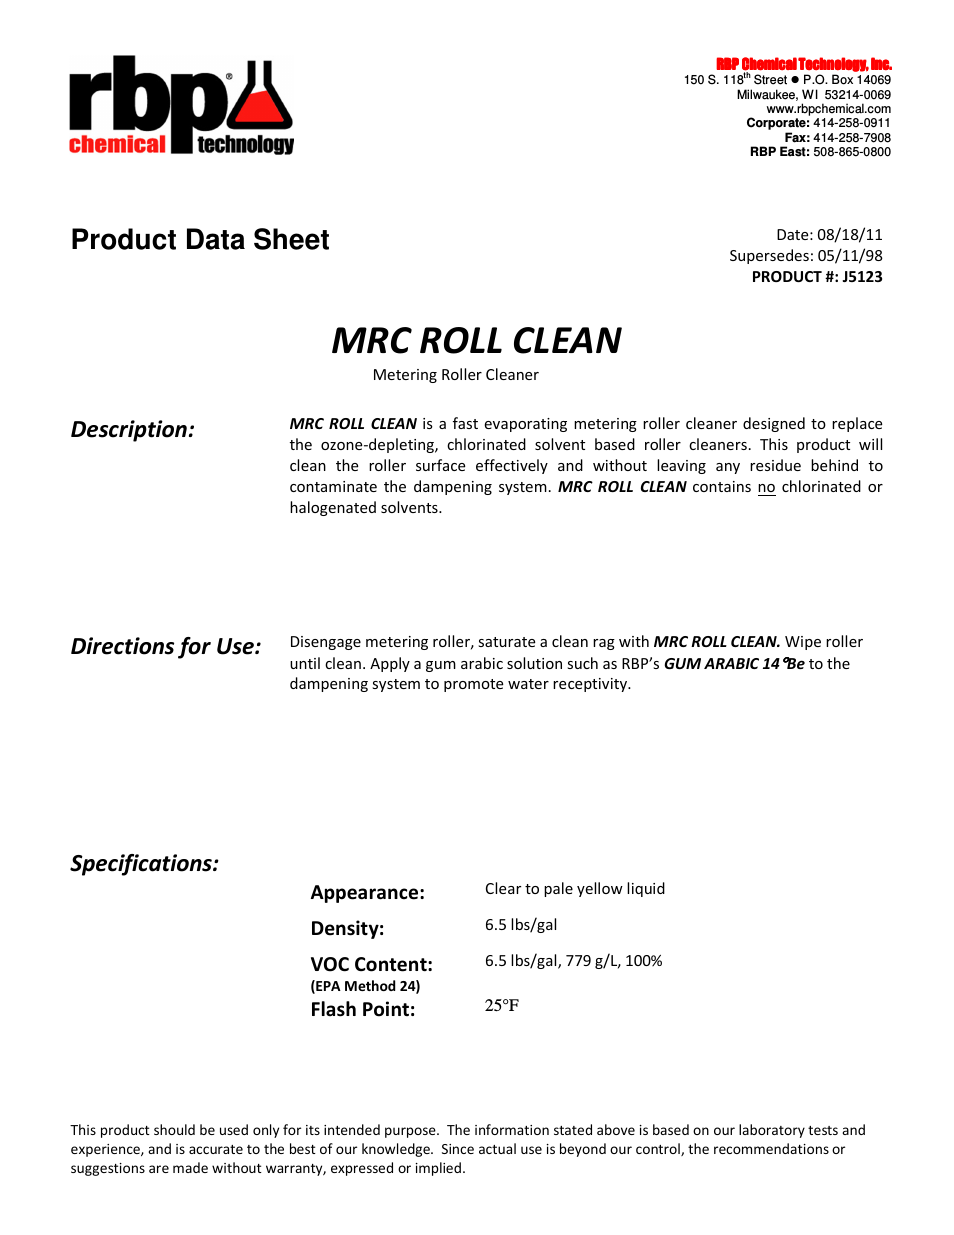 J5123 MRC ROLL CLEAN